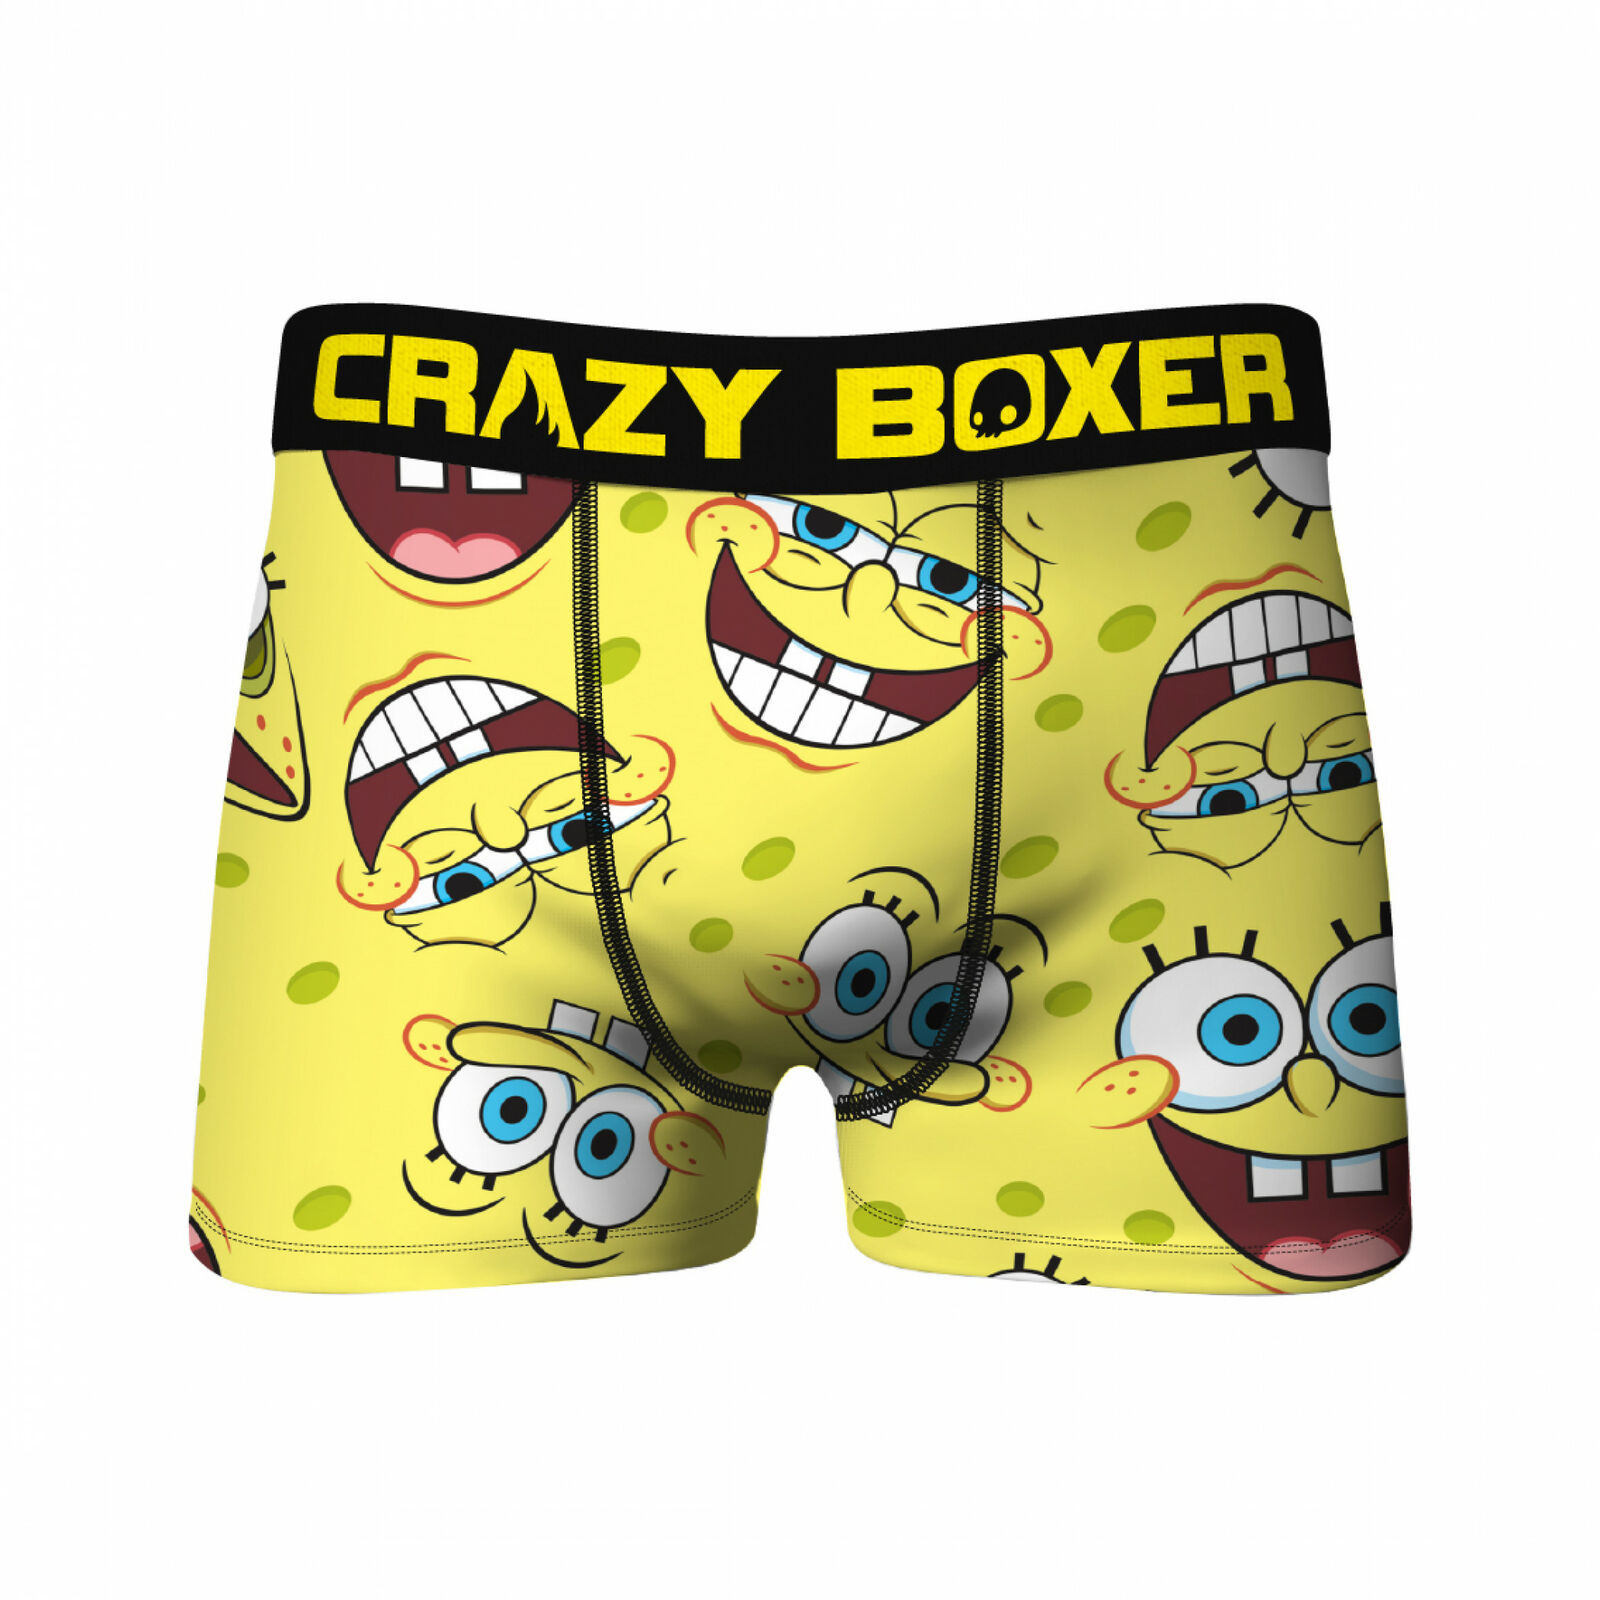 Crazy Boxers SpongeBob SquarePants Face All and 50 similar items